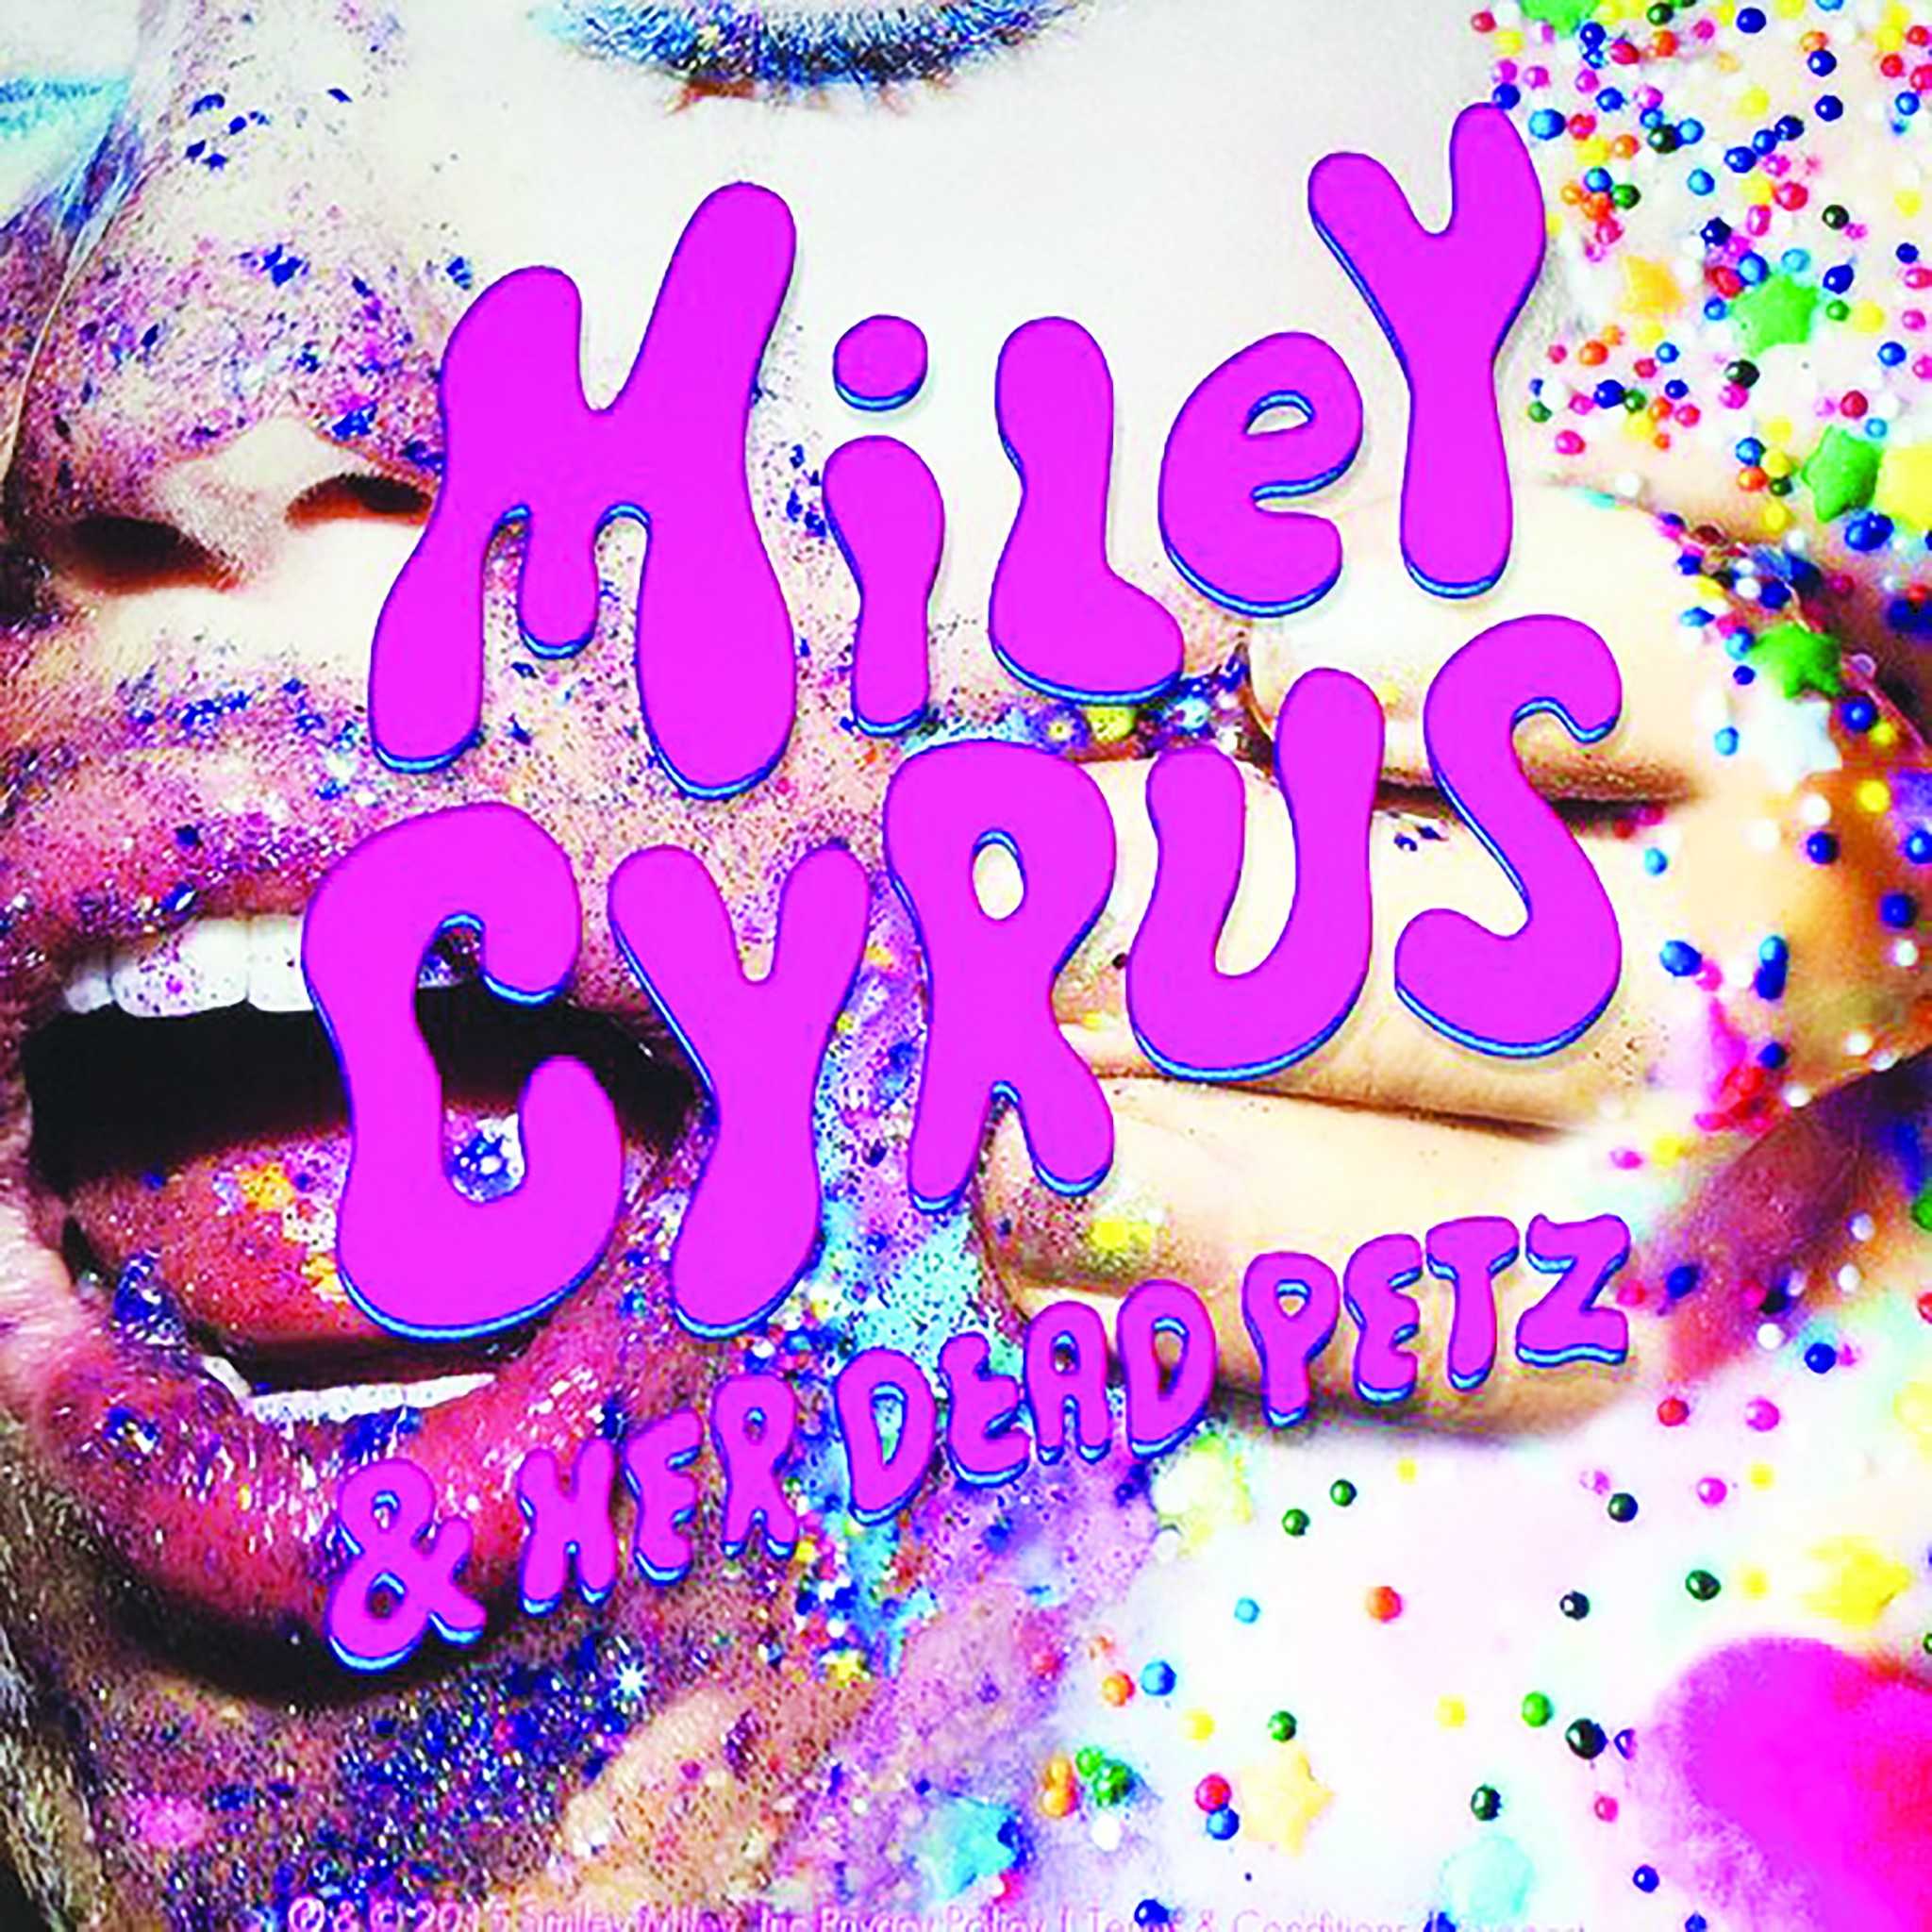 Miley+Cyrus+gets+weird+on+new+surprise+album